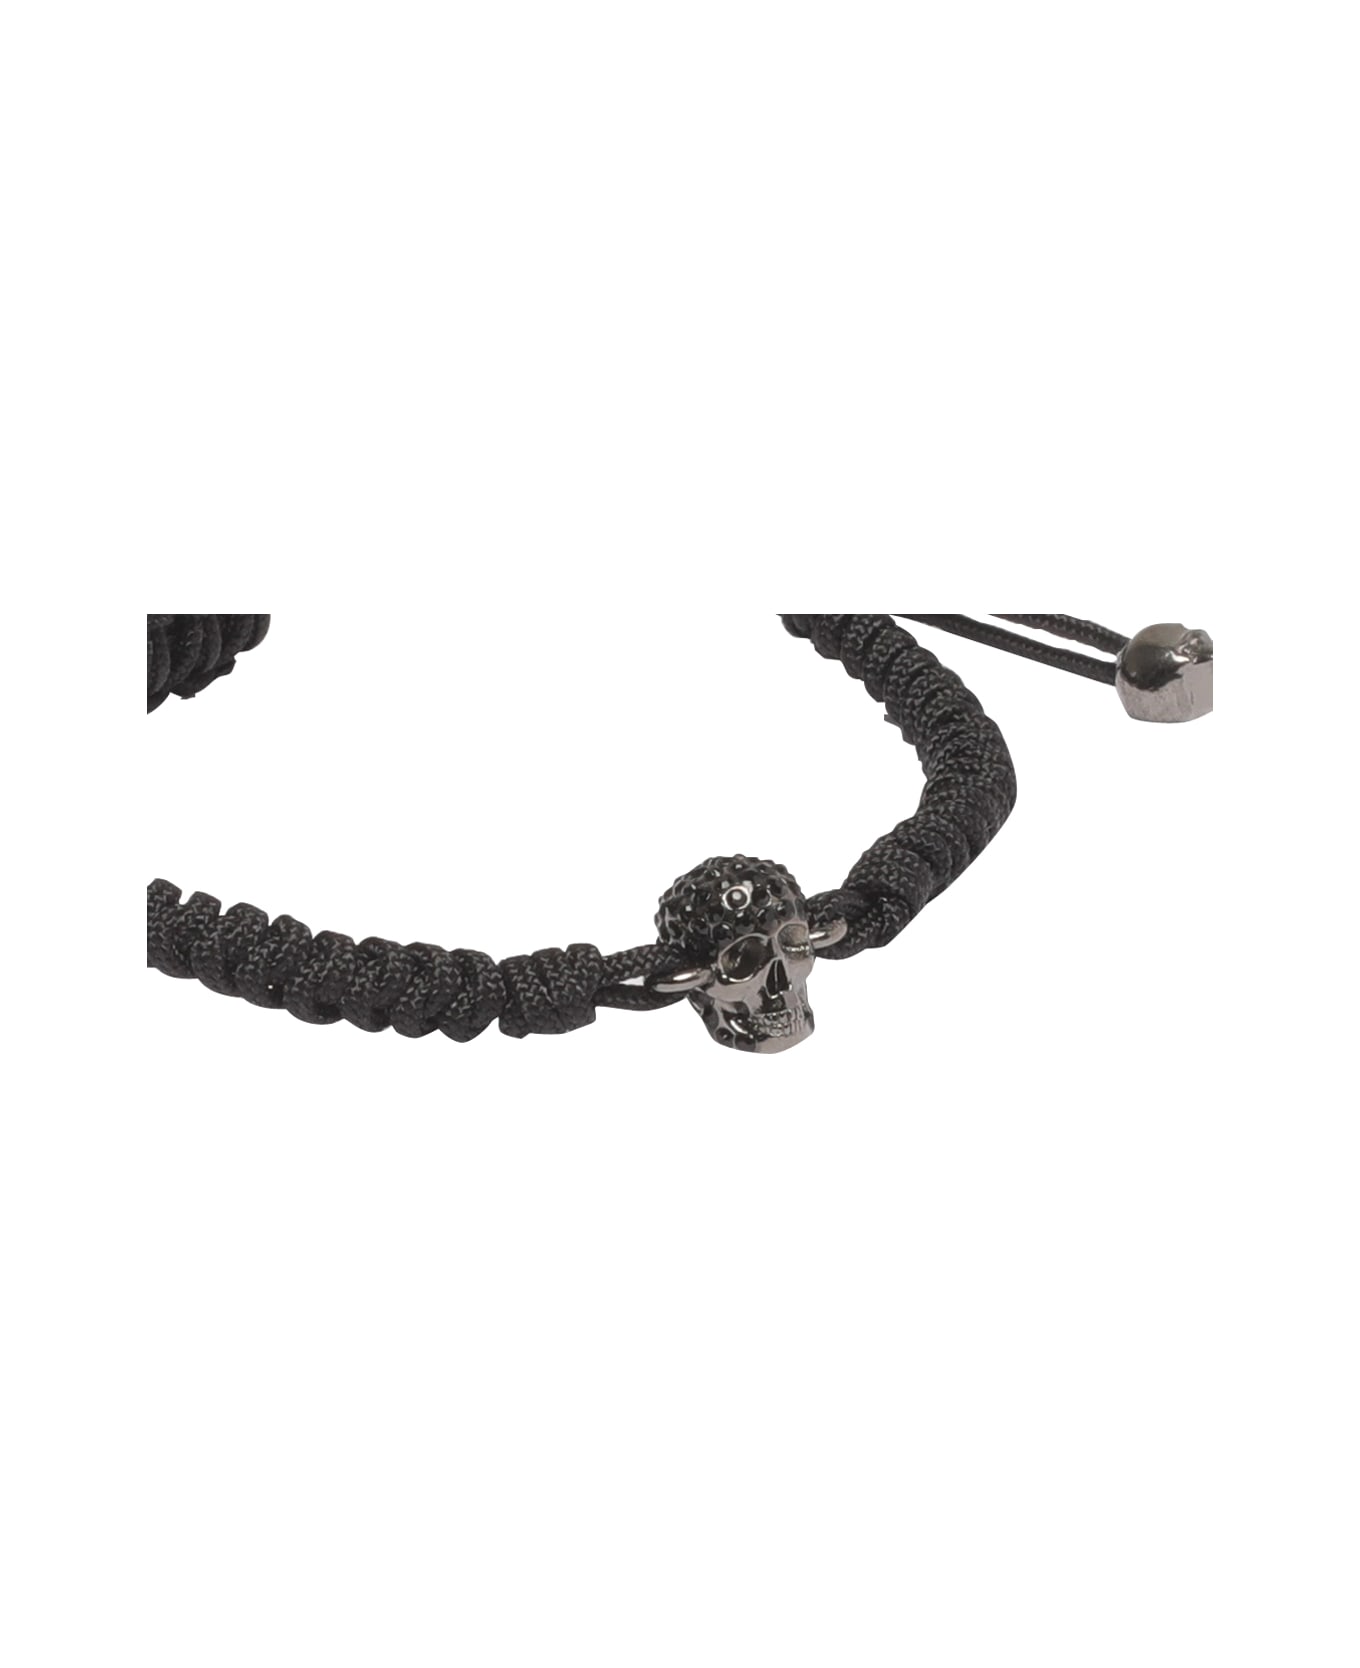 Alexander McQueen Pave' Skull Friendship Bracelet - Nero